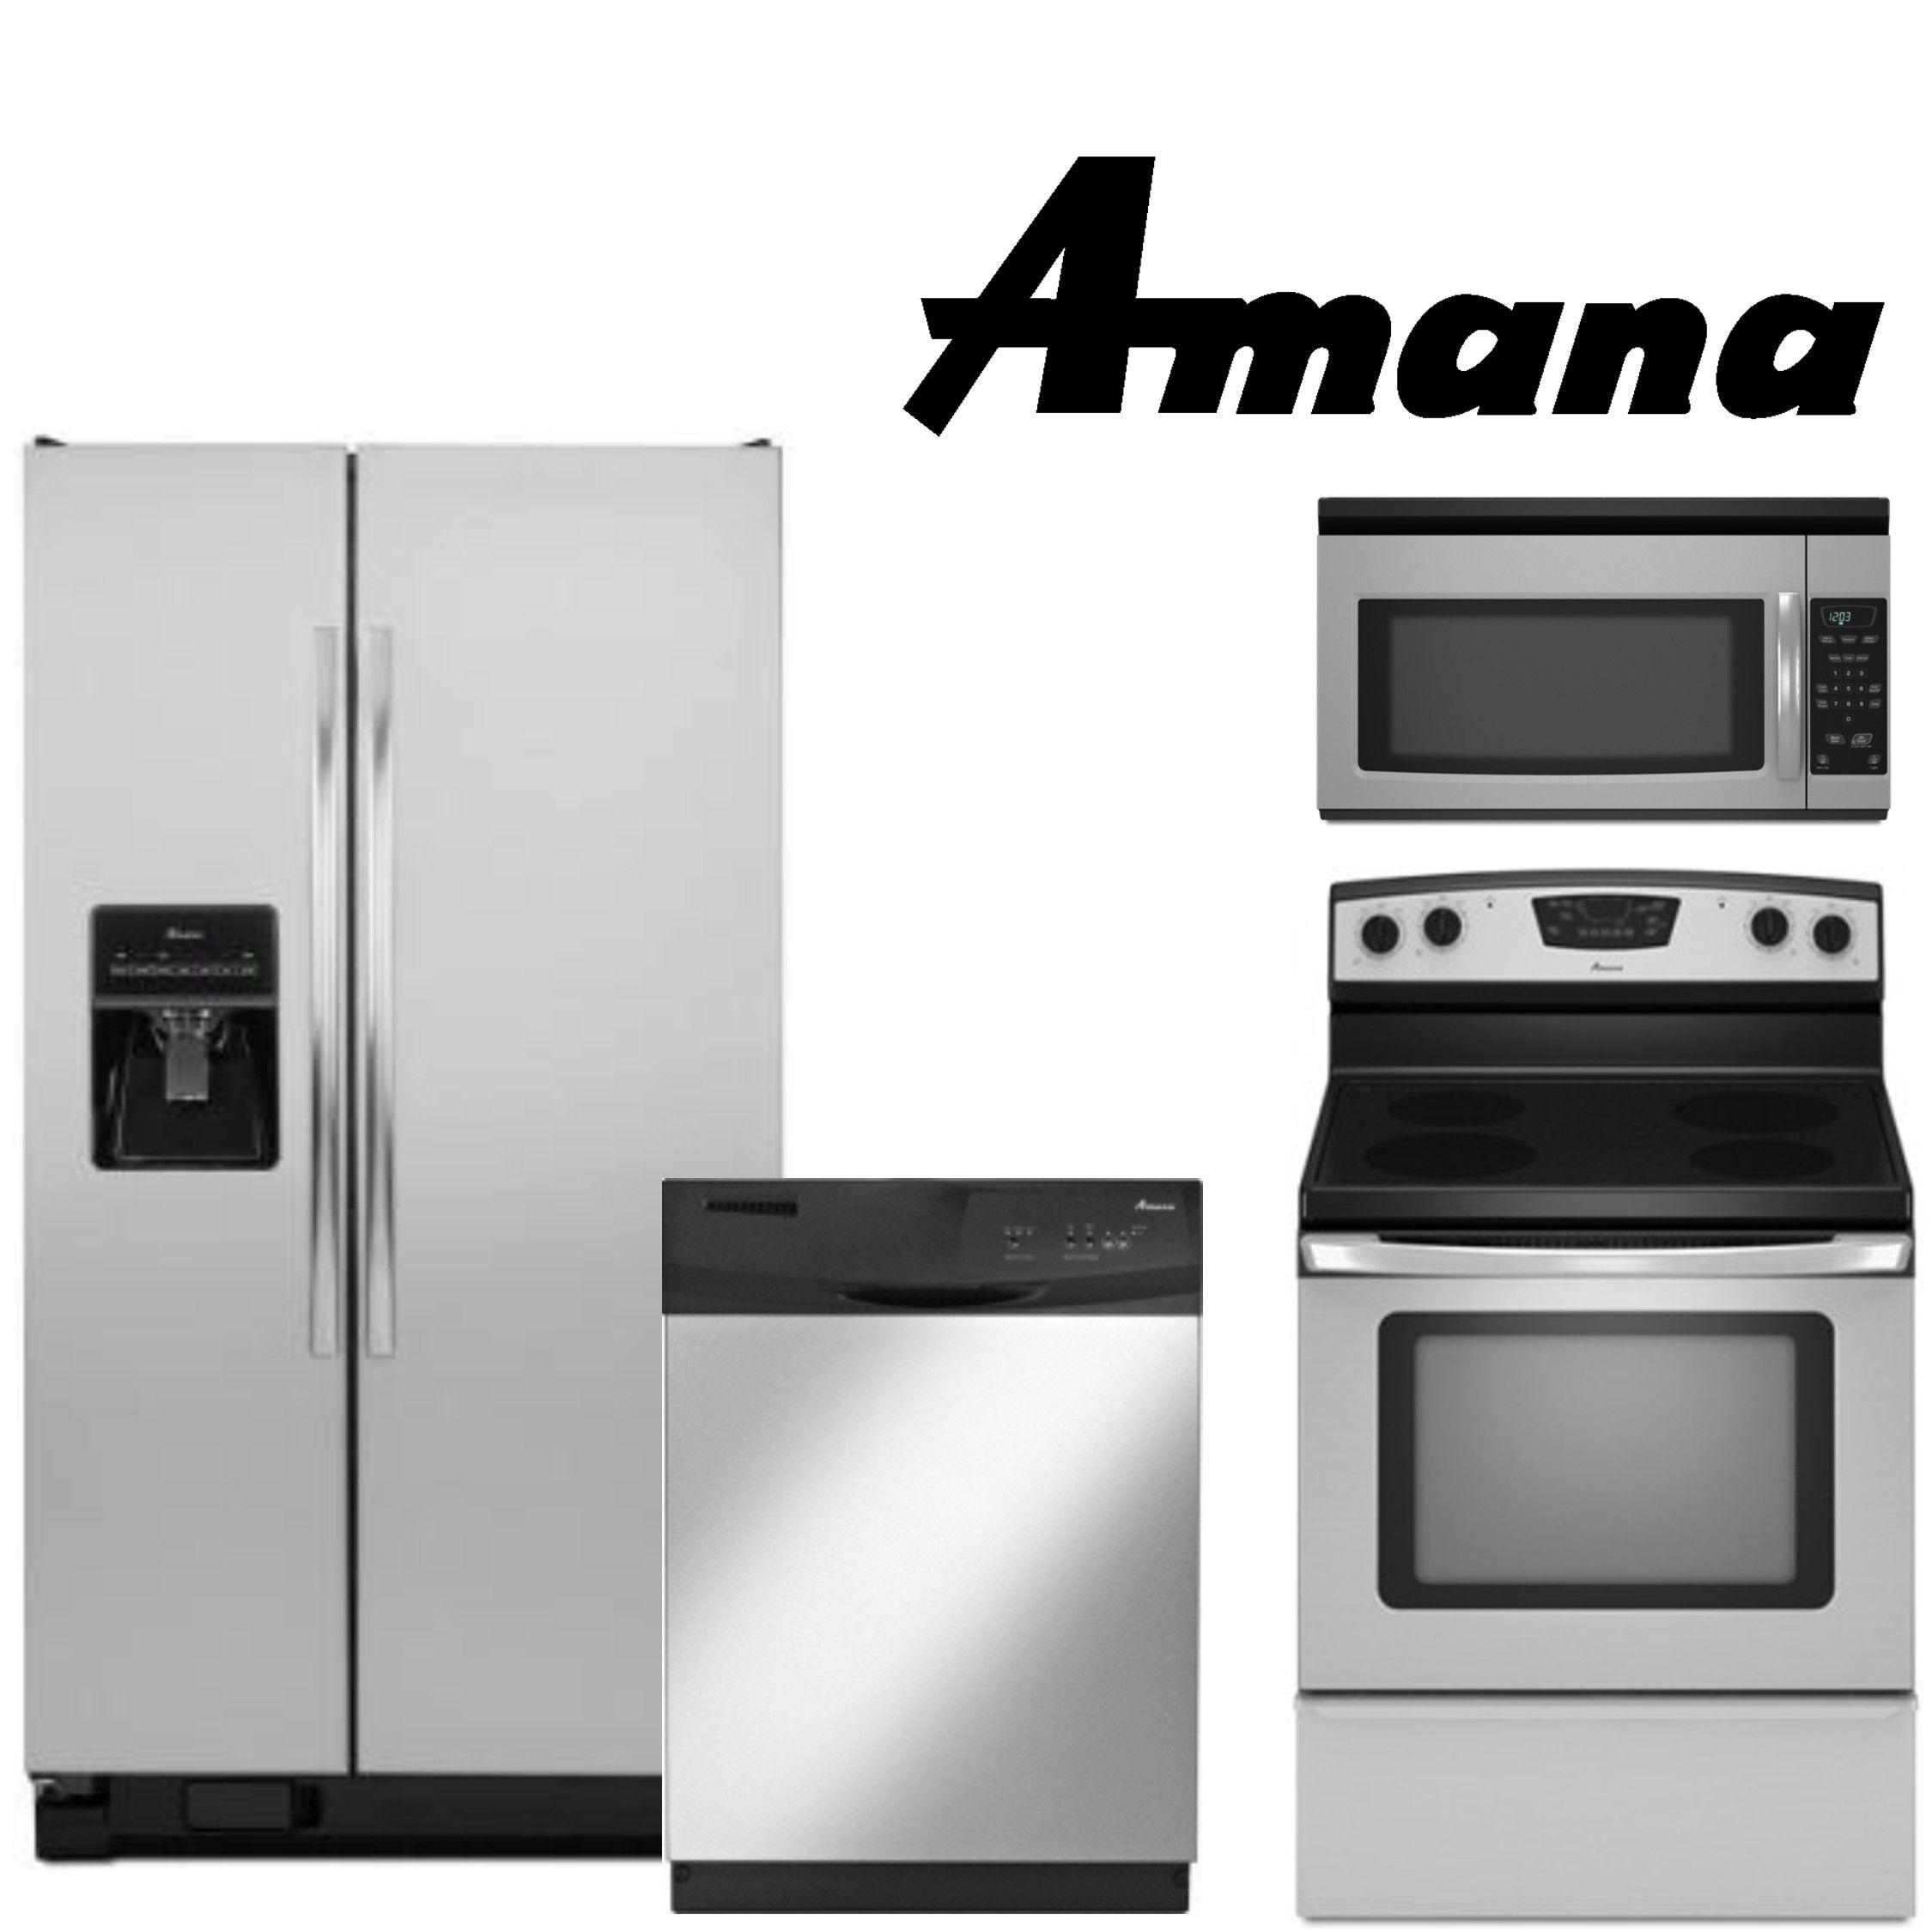 Refegerator Amana Logo - Refrigerators Parts: Quality Appliance Repair